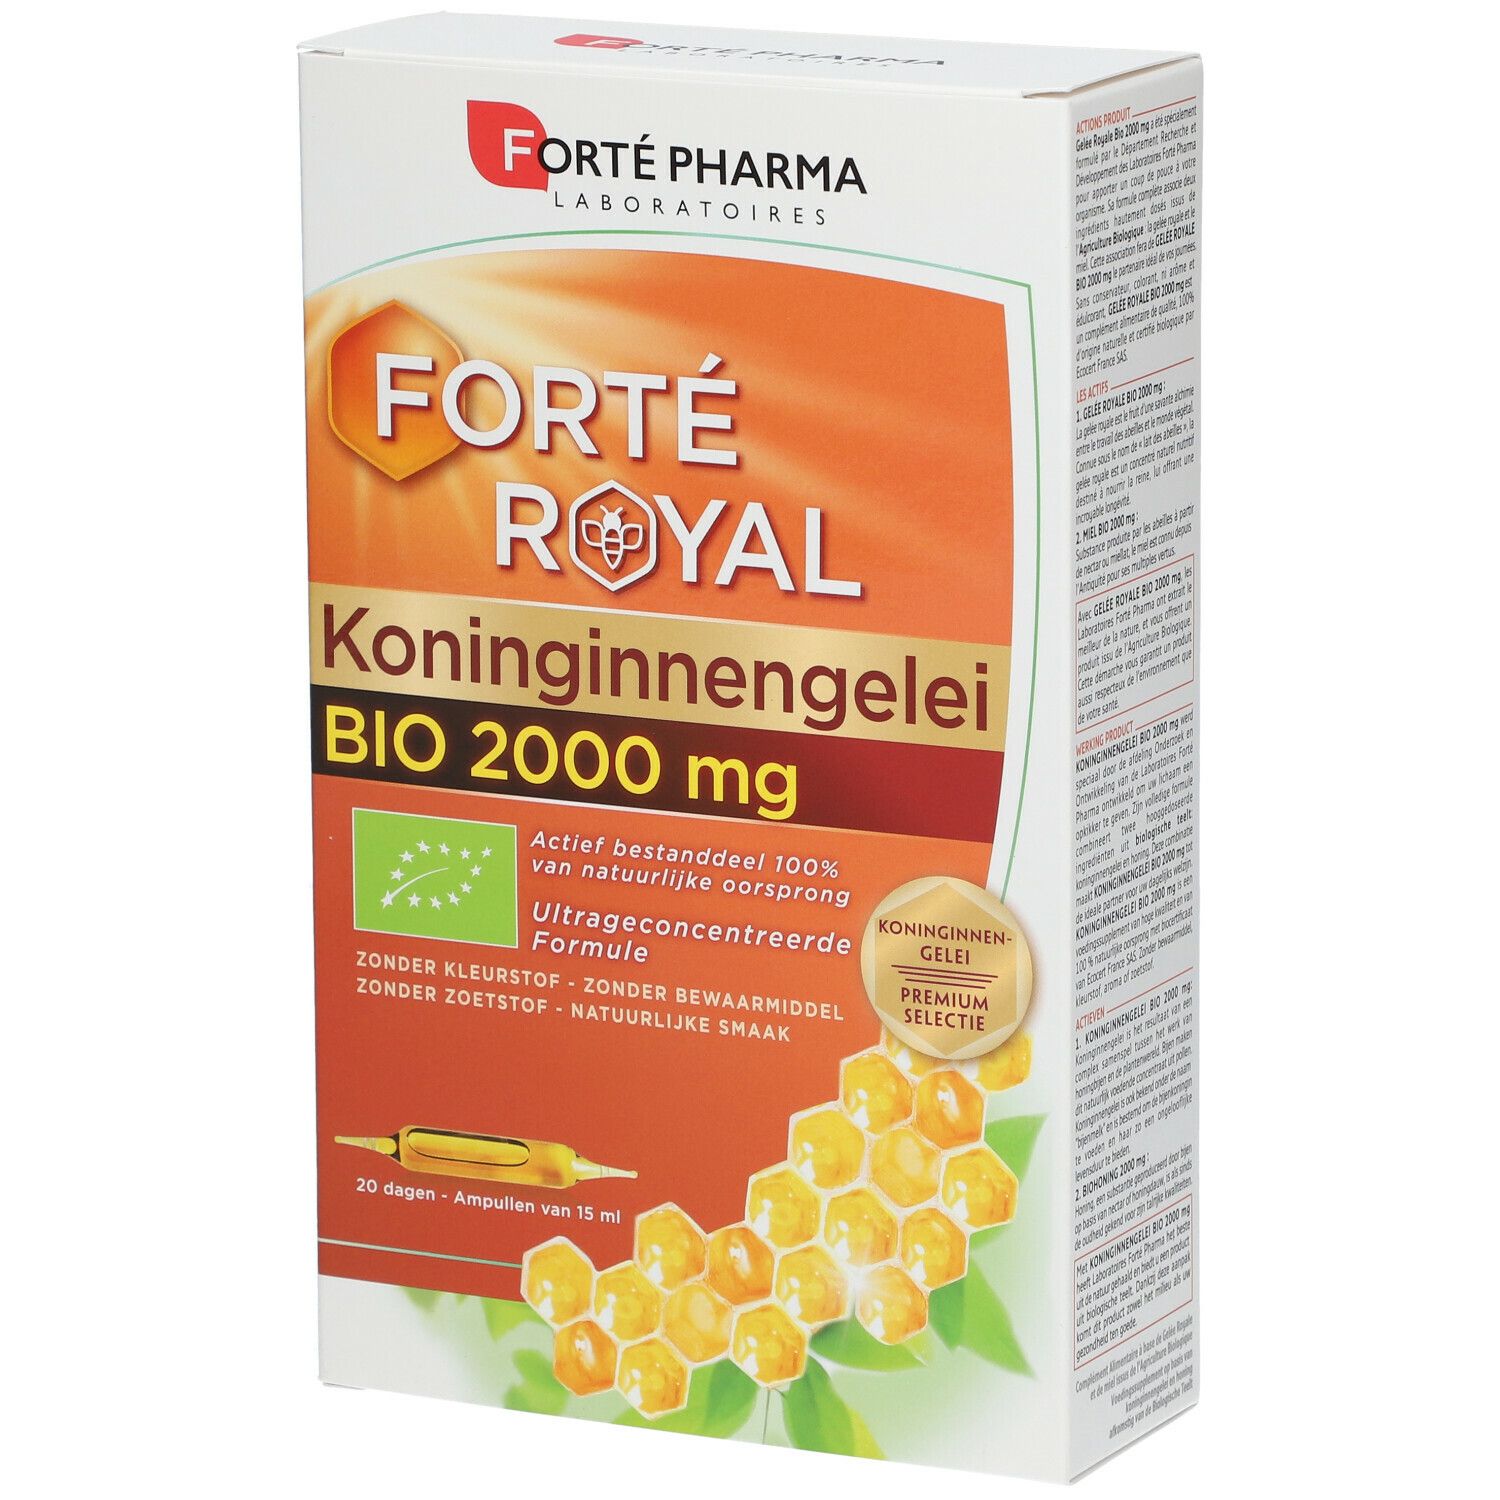 Forté Pharma Gelee Royale 2000 mg